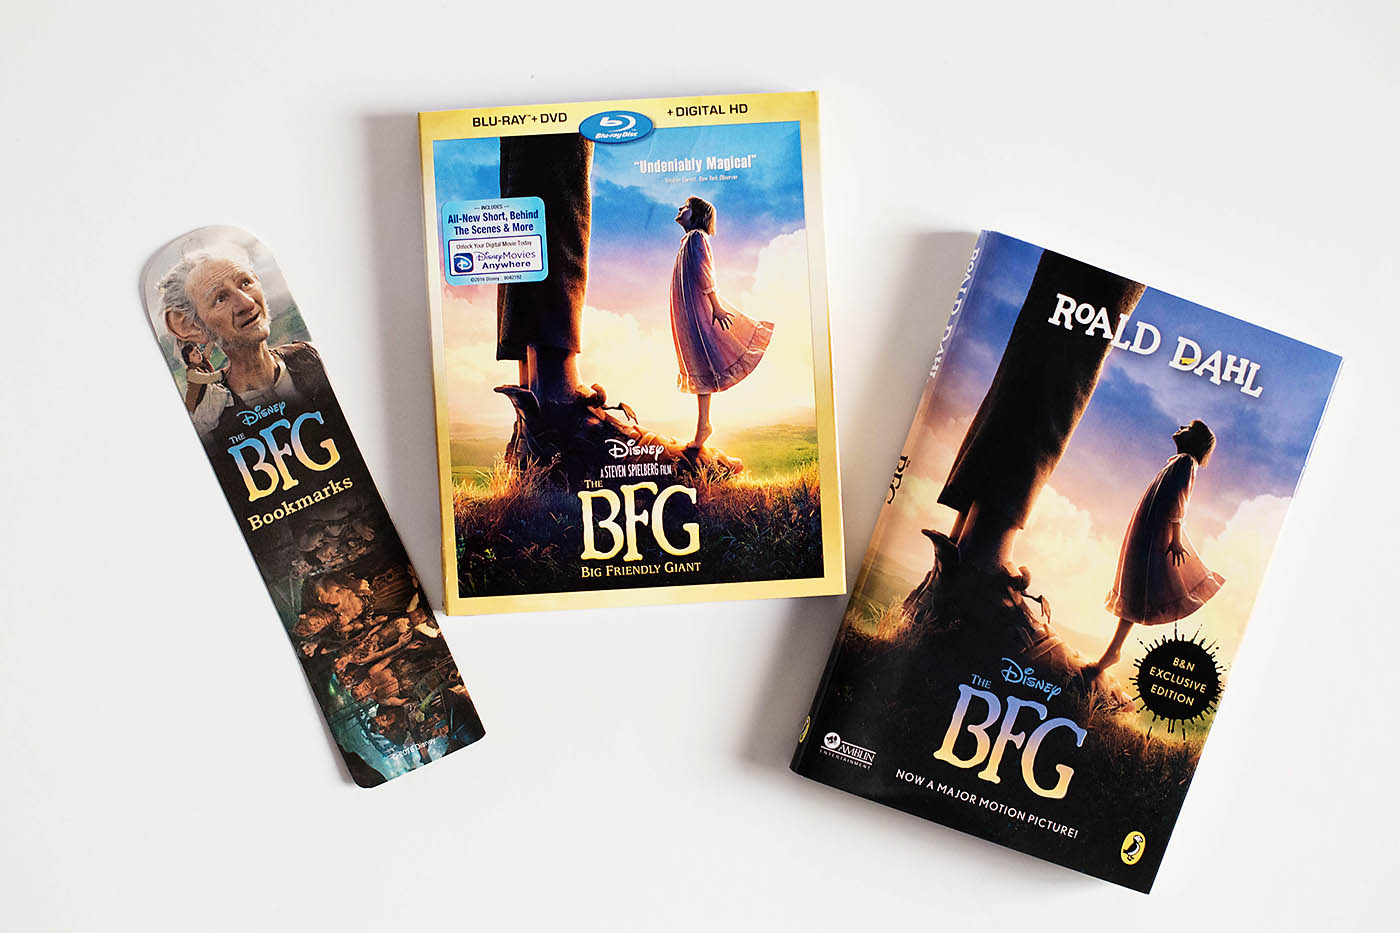 The BFG Blu-ray gift idea